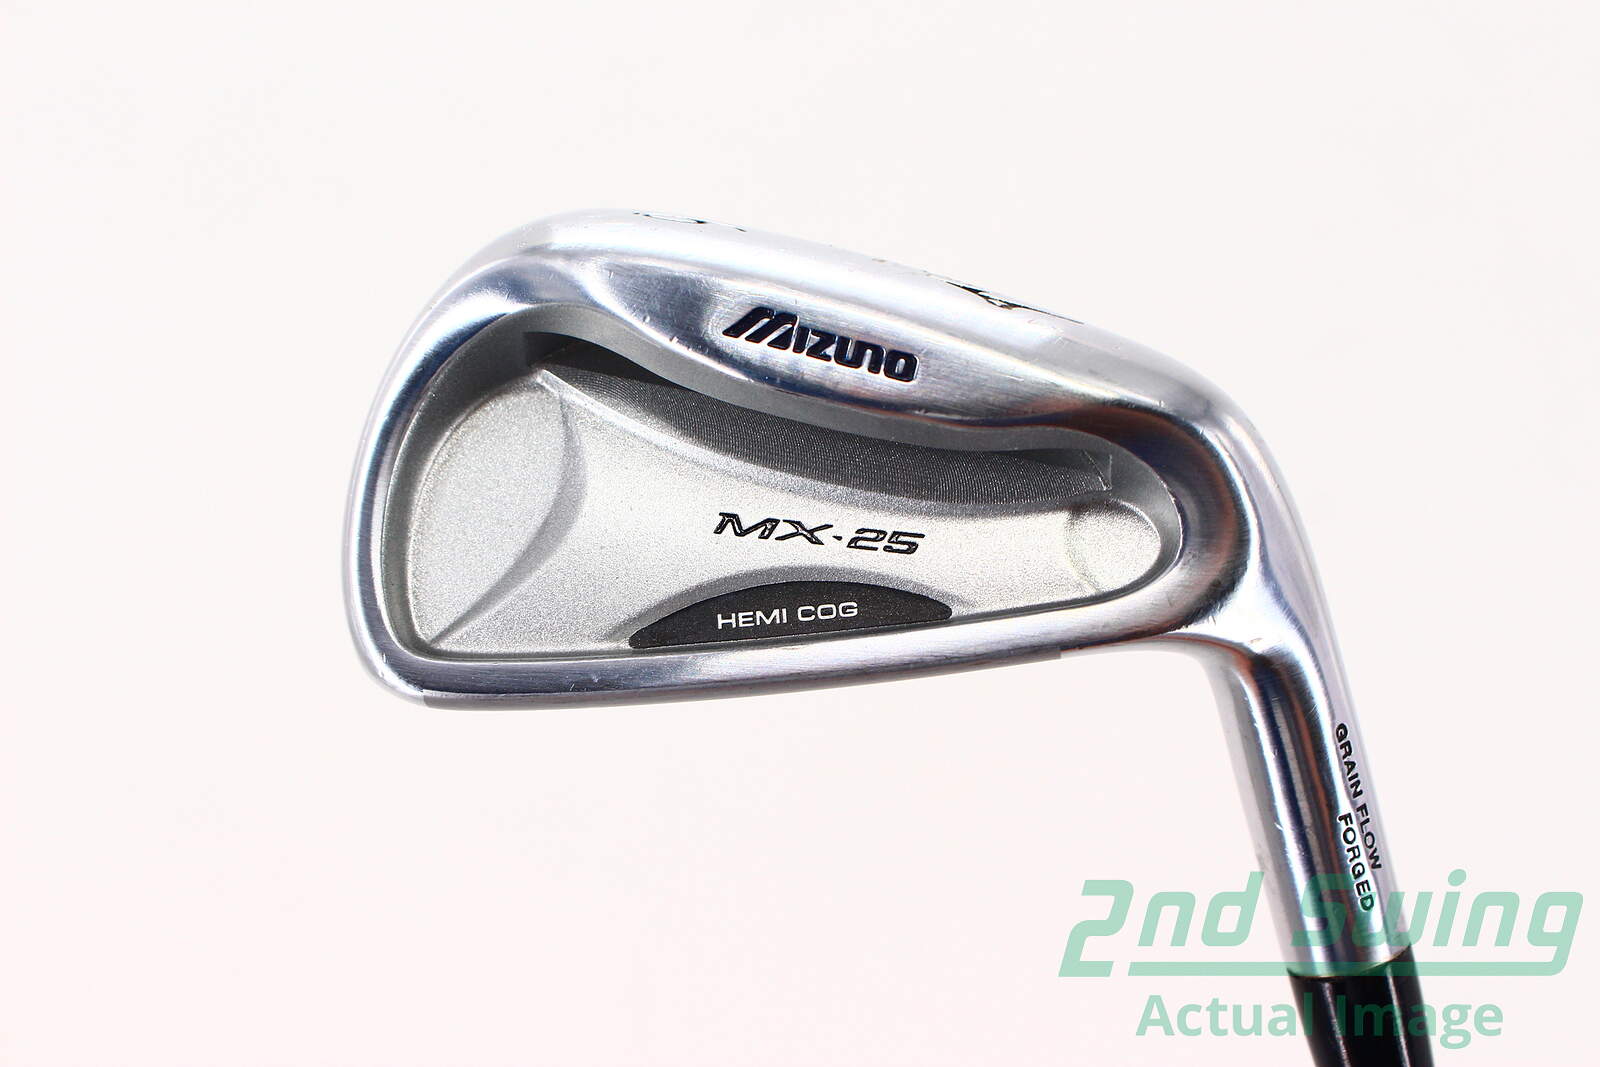 mizuno mx 25 irons for sale